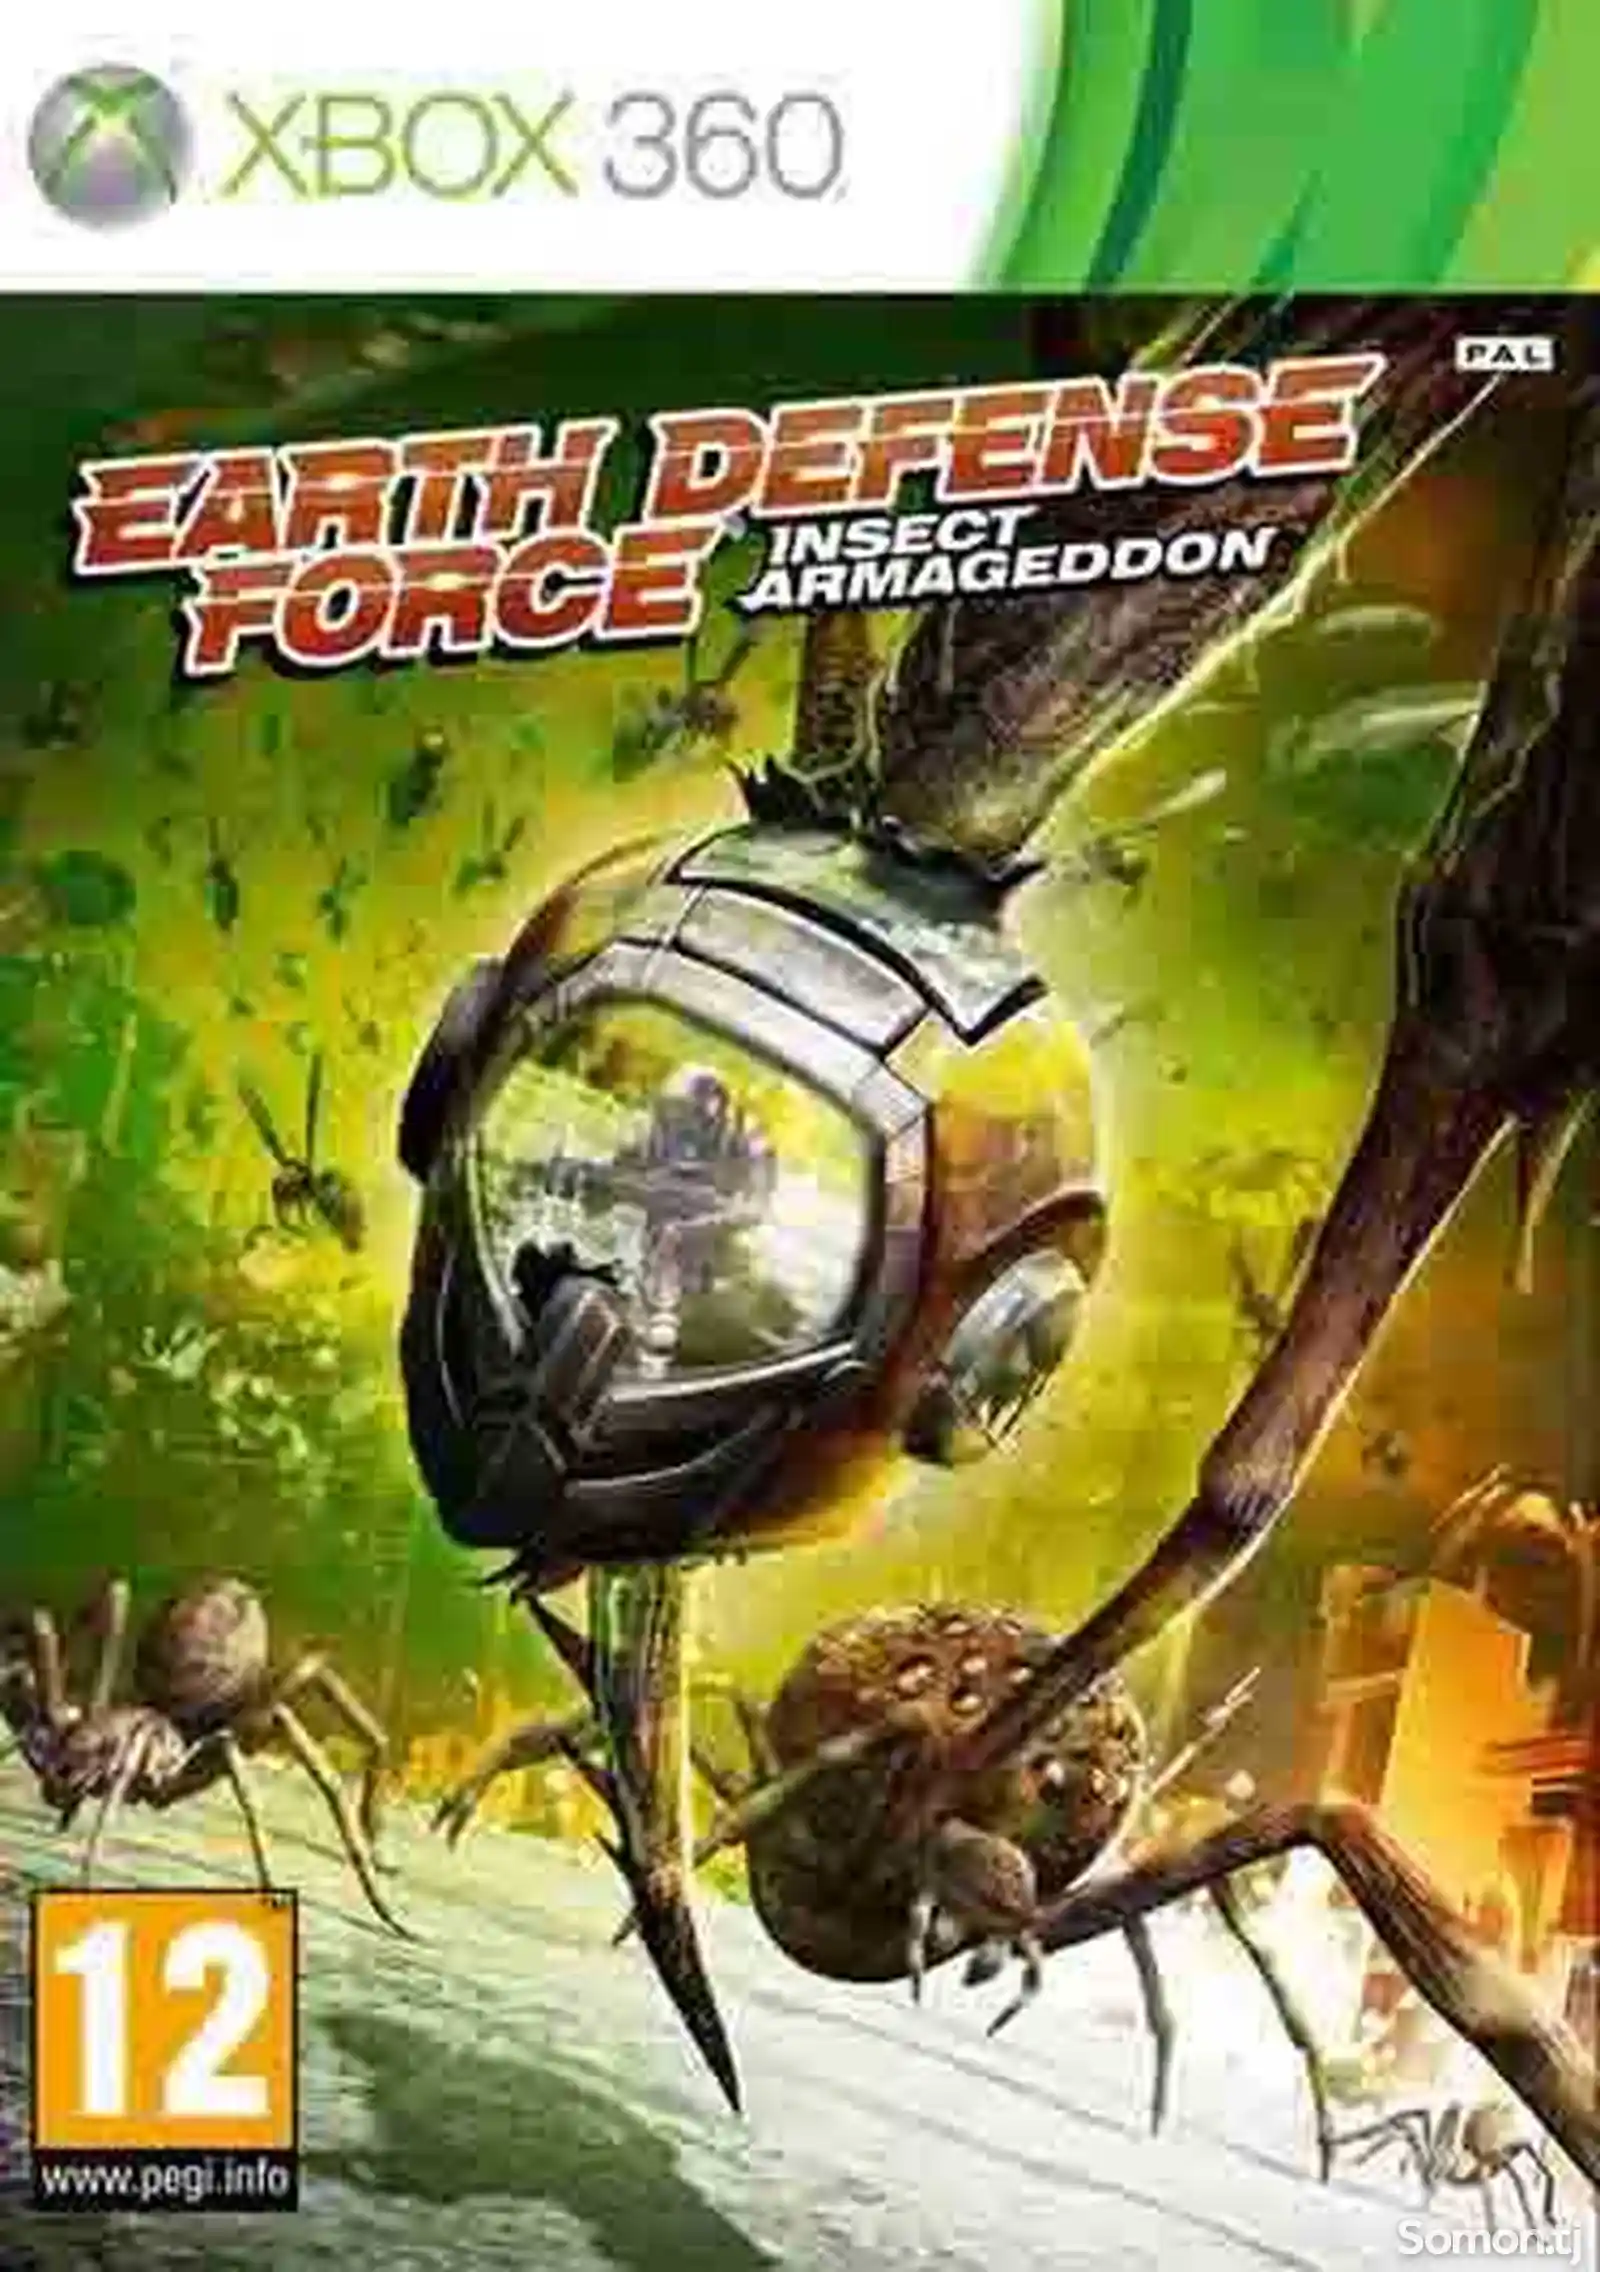 Игра Earth defense force для прошитых Xbox 360